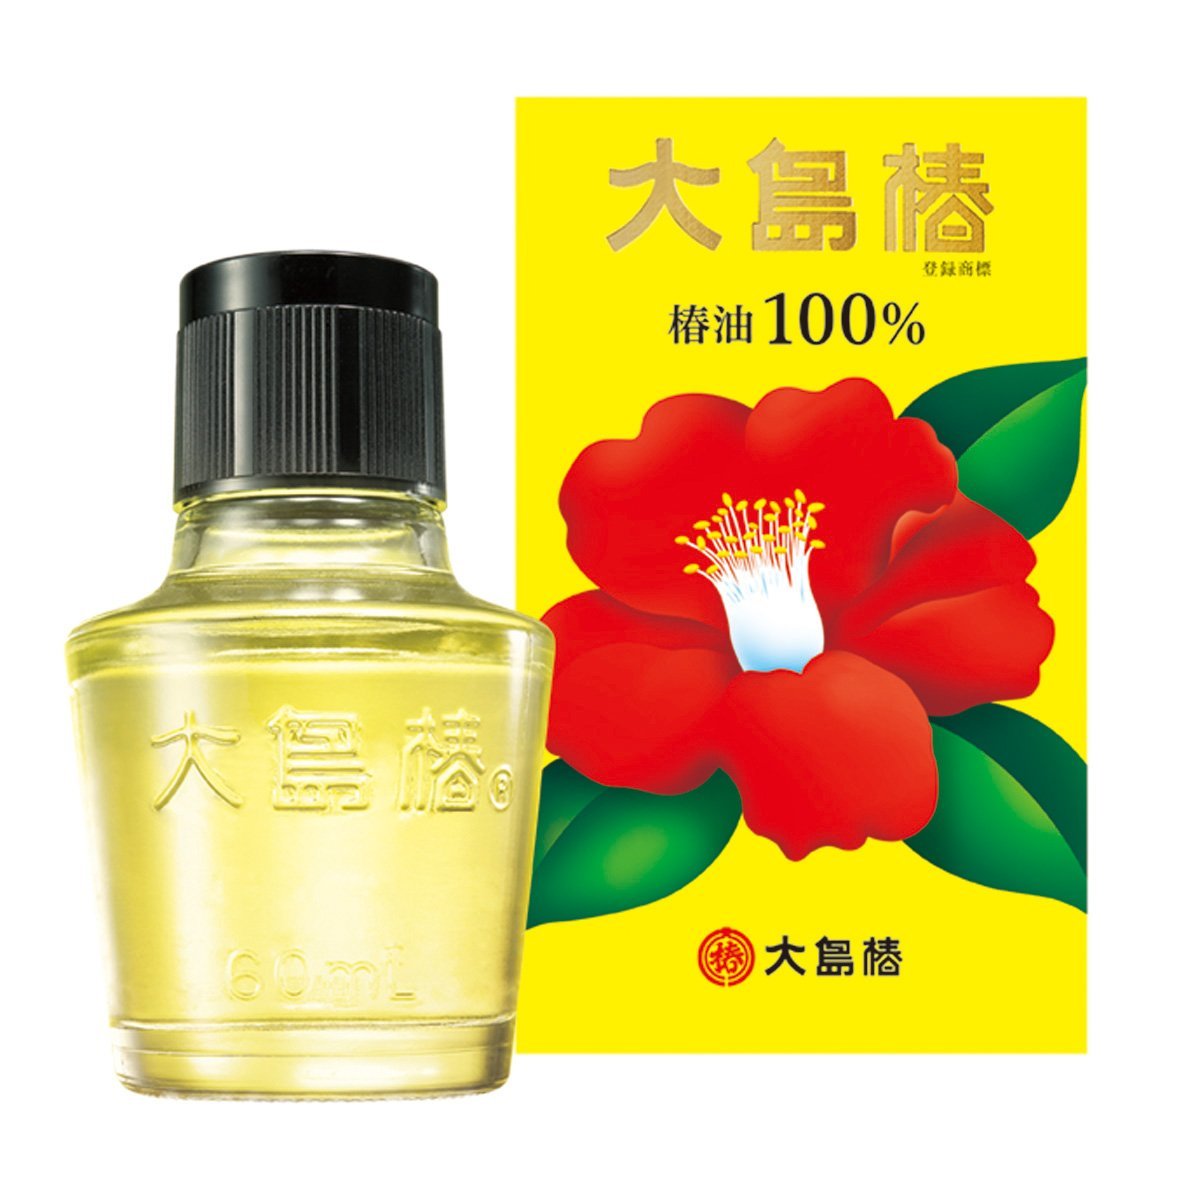 Oshima Tsubaki Camellia Hair Care Oil 60ml